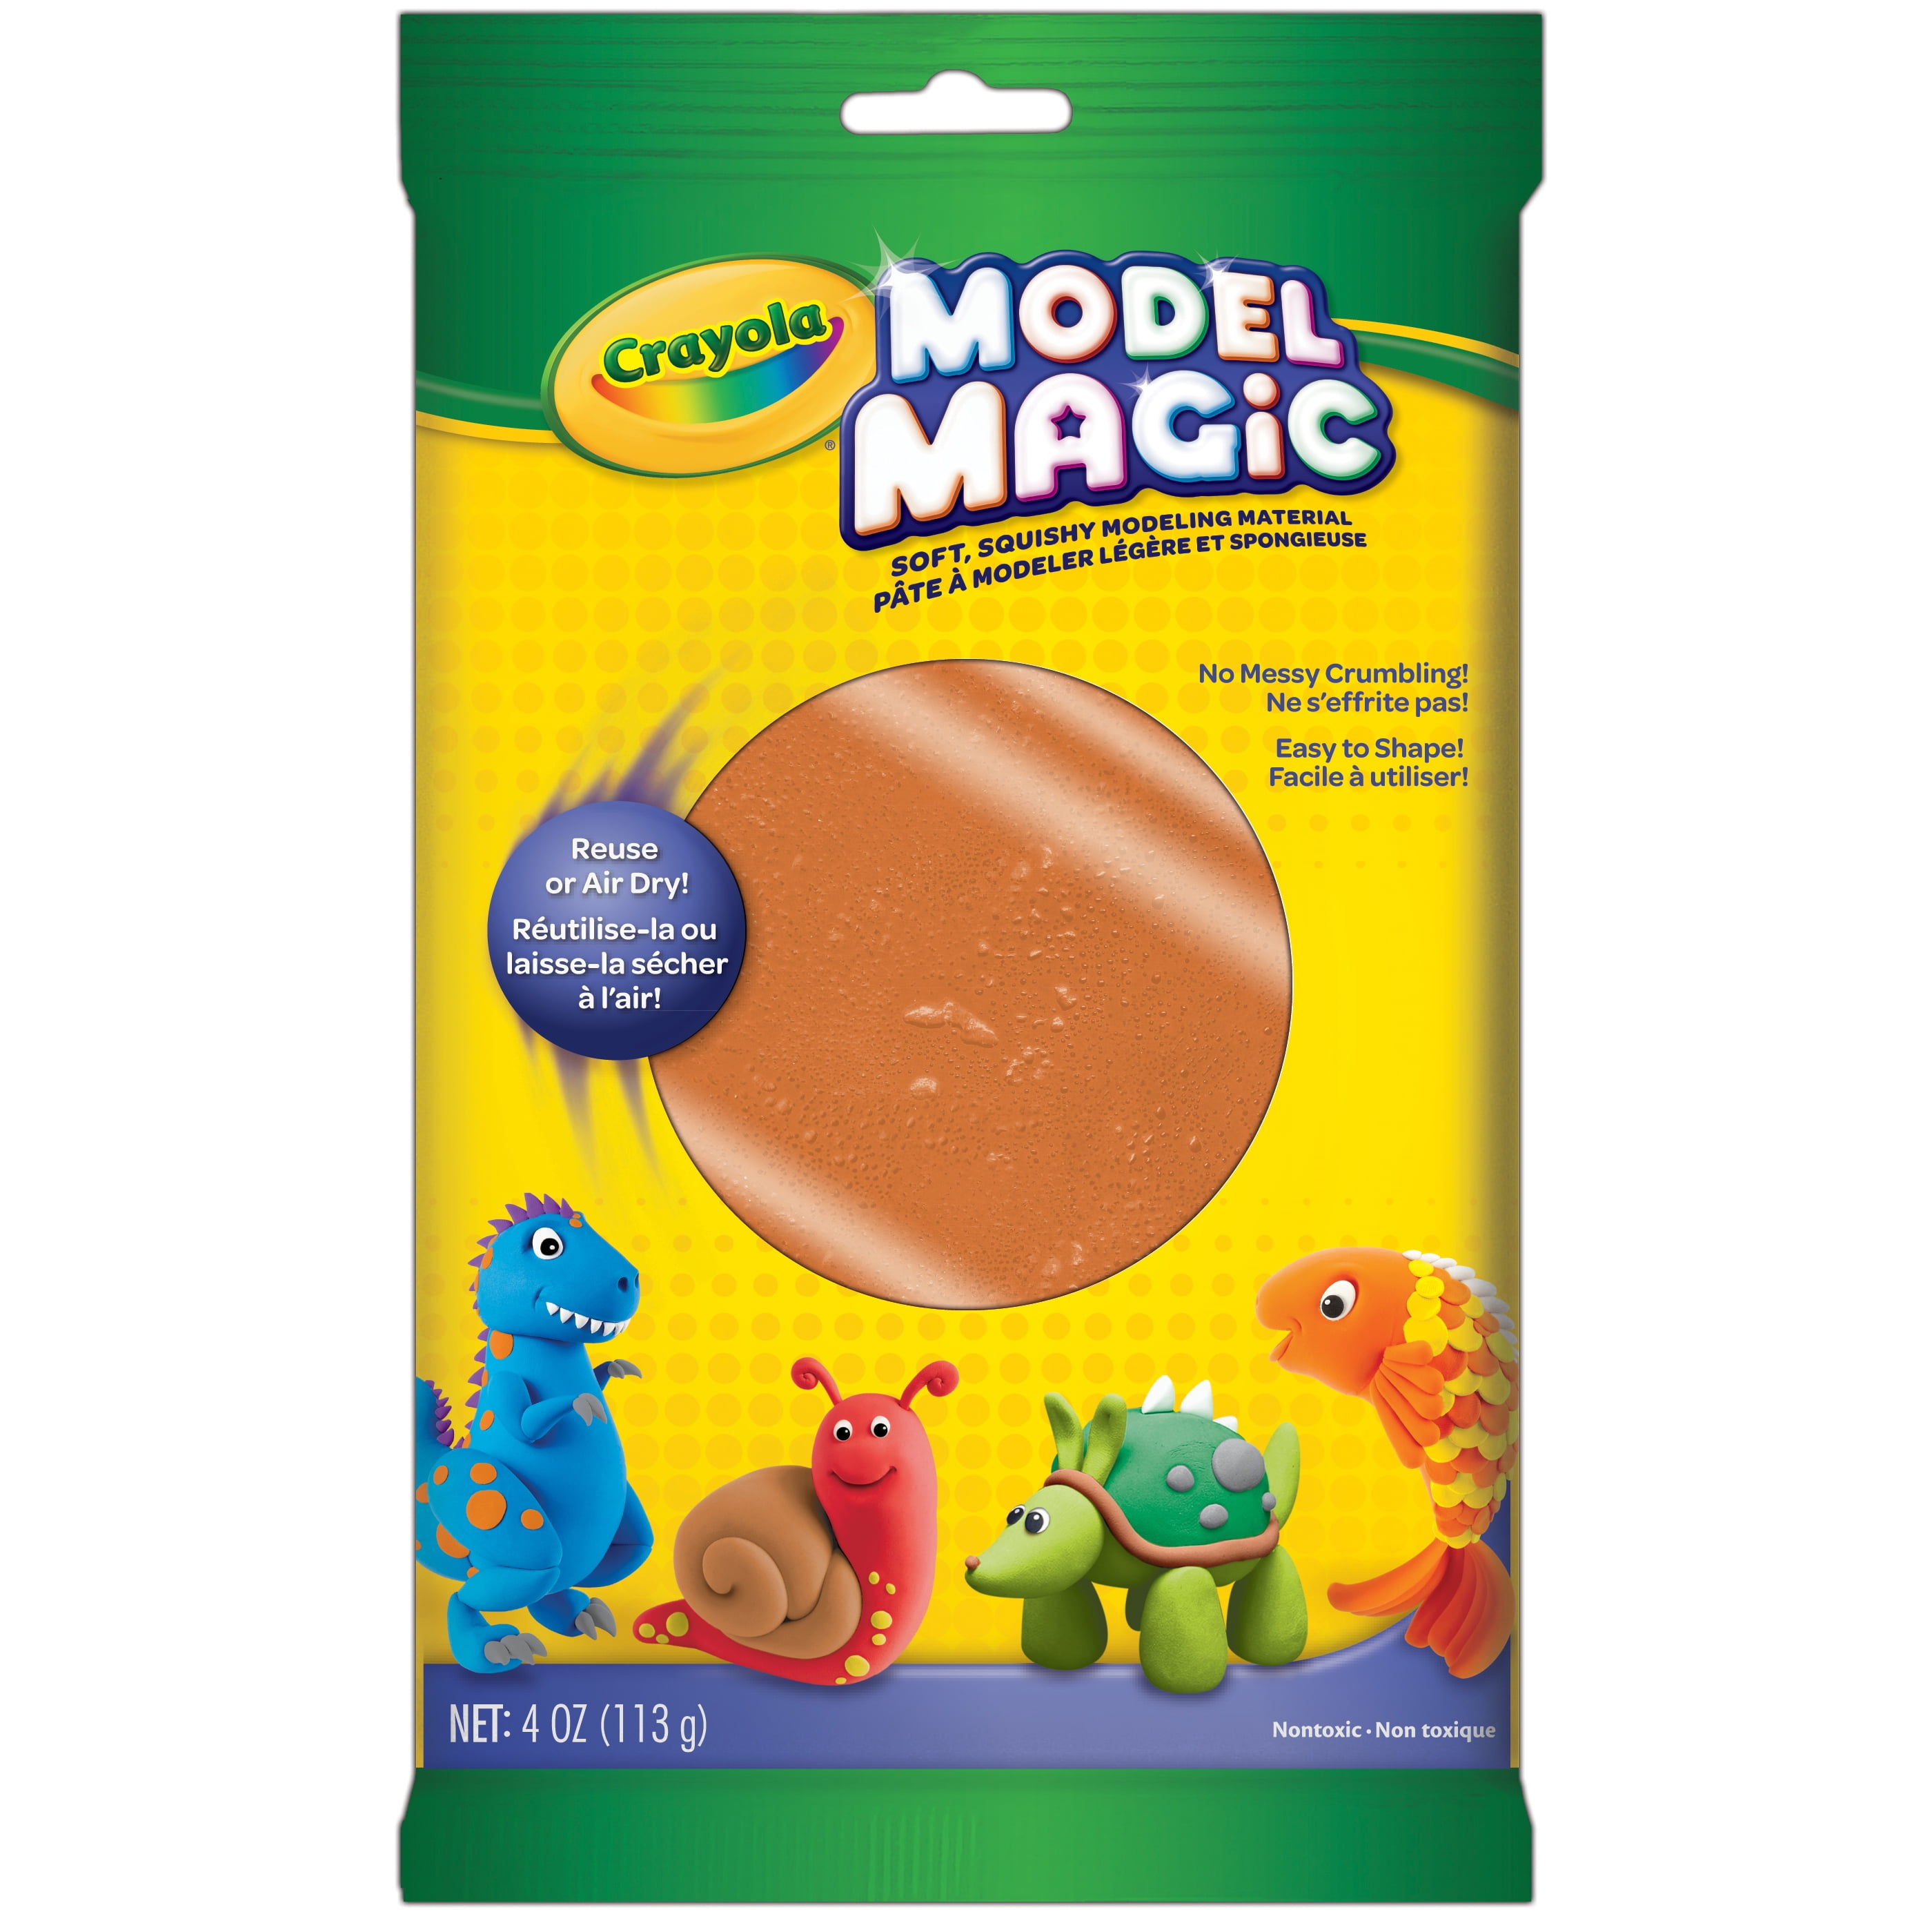  Crayola Model Magic Non-Toxic Mess-Free